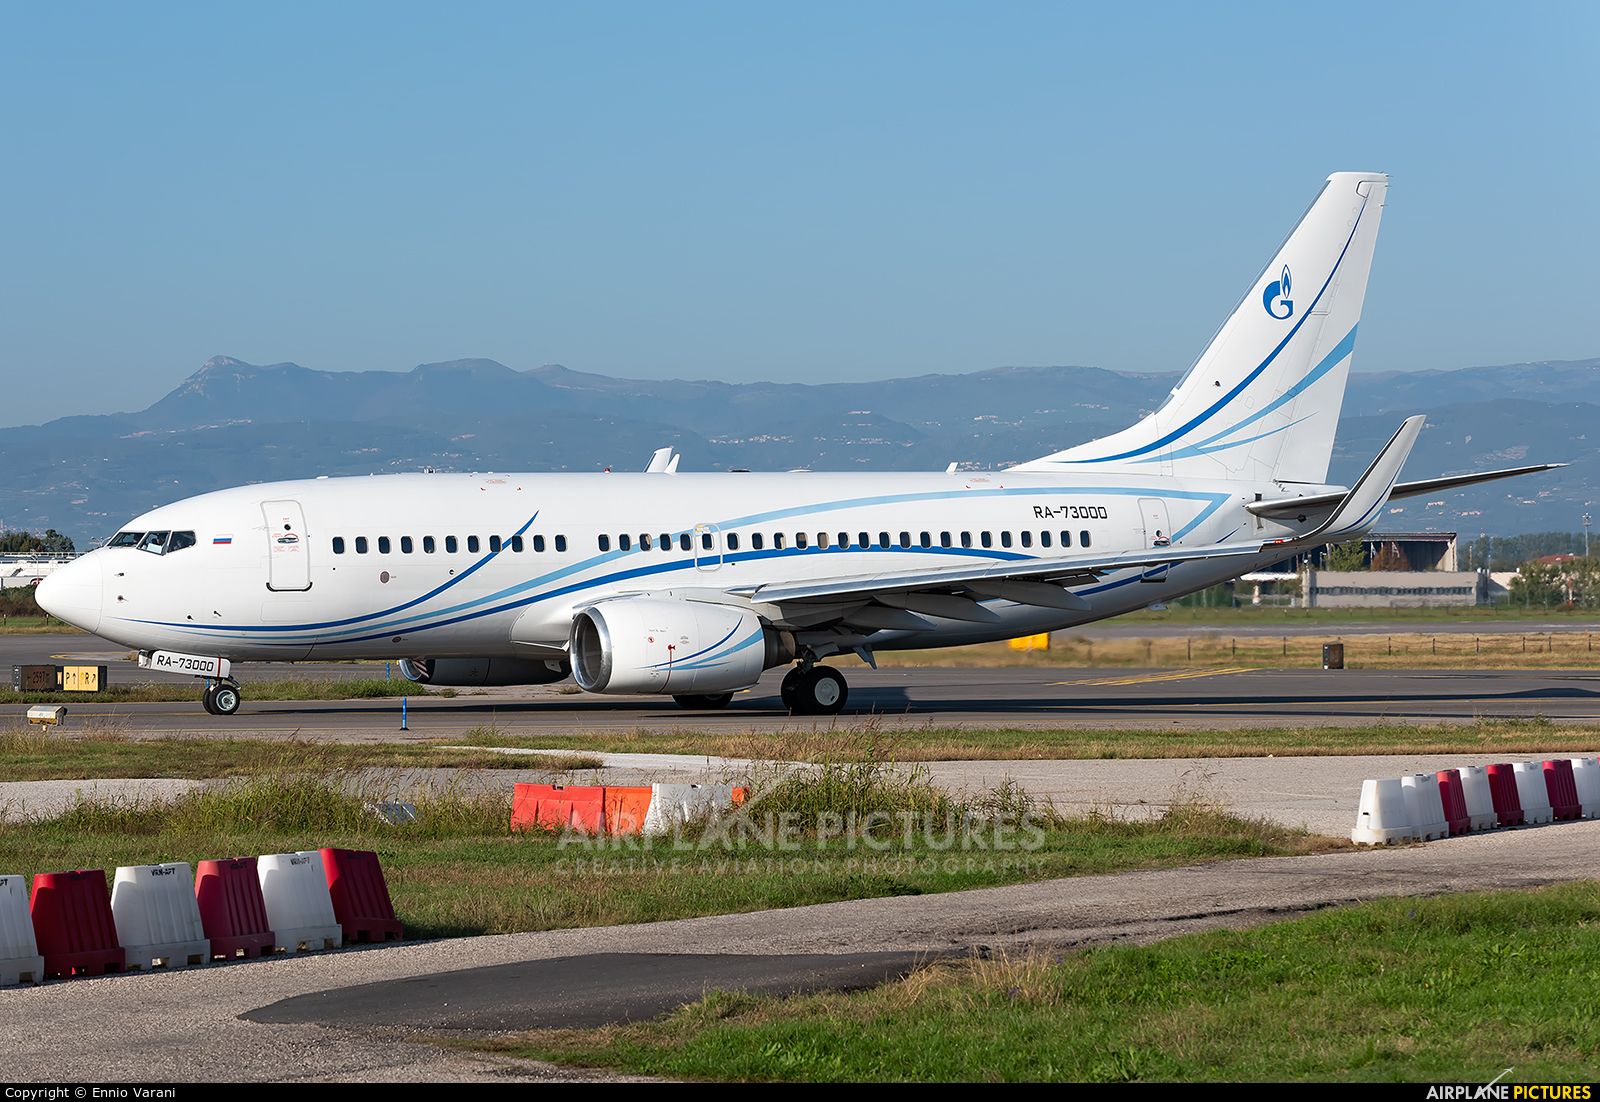 Gazpromavia RA-73000 aircraft at Verona - Villafranca